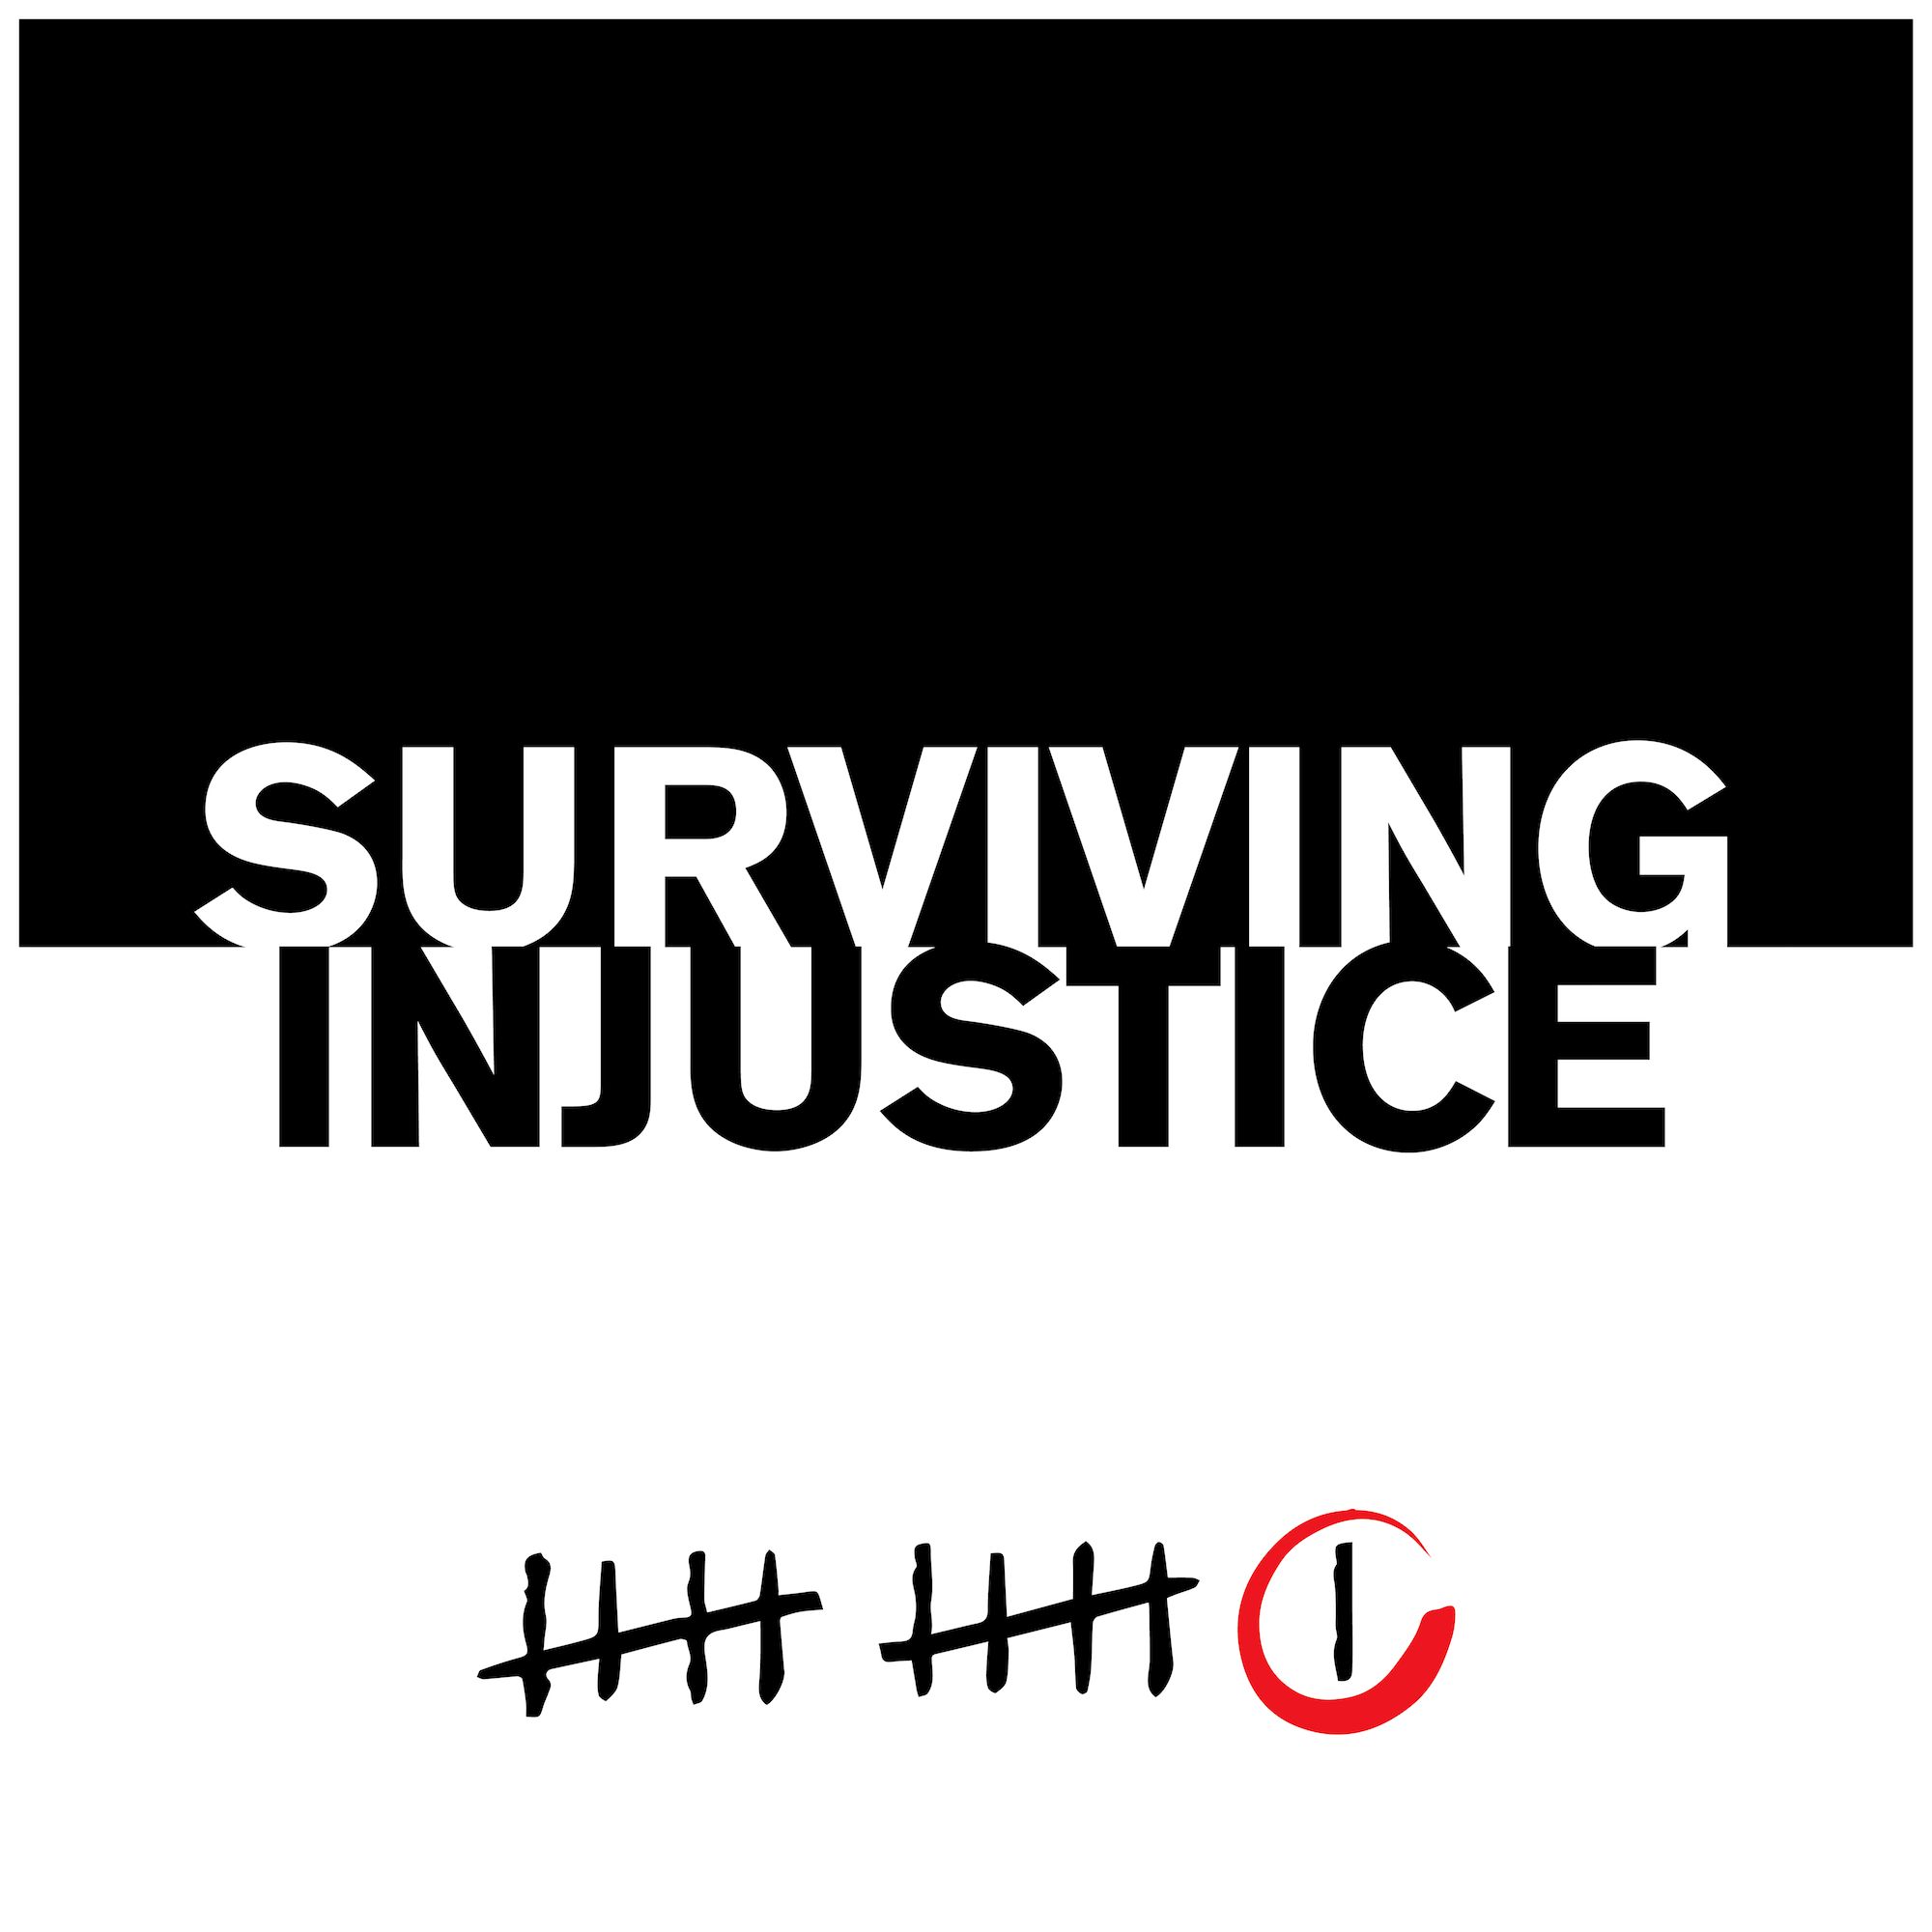 Surviving Injustice